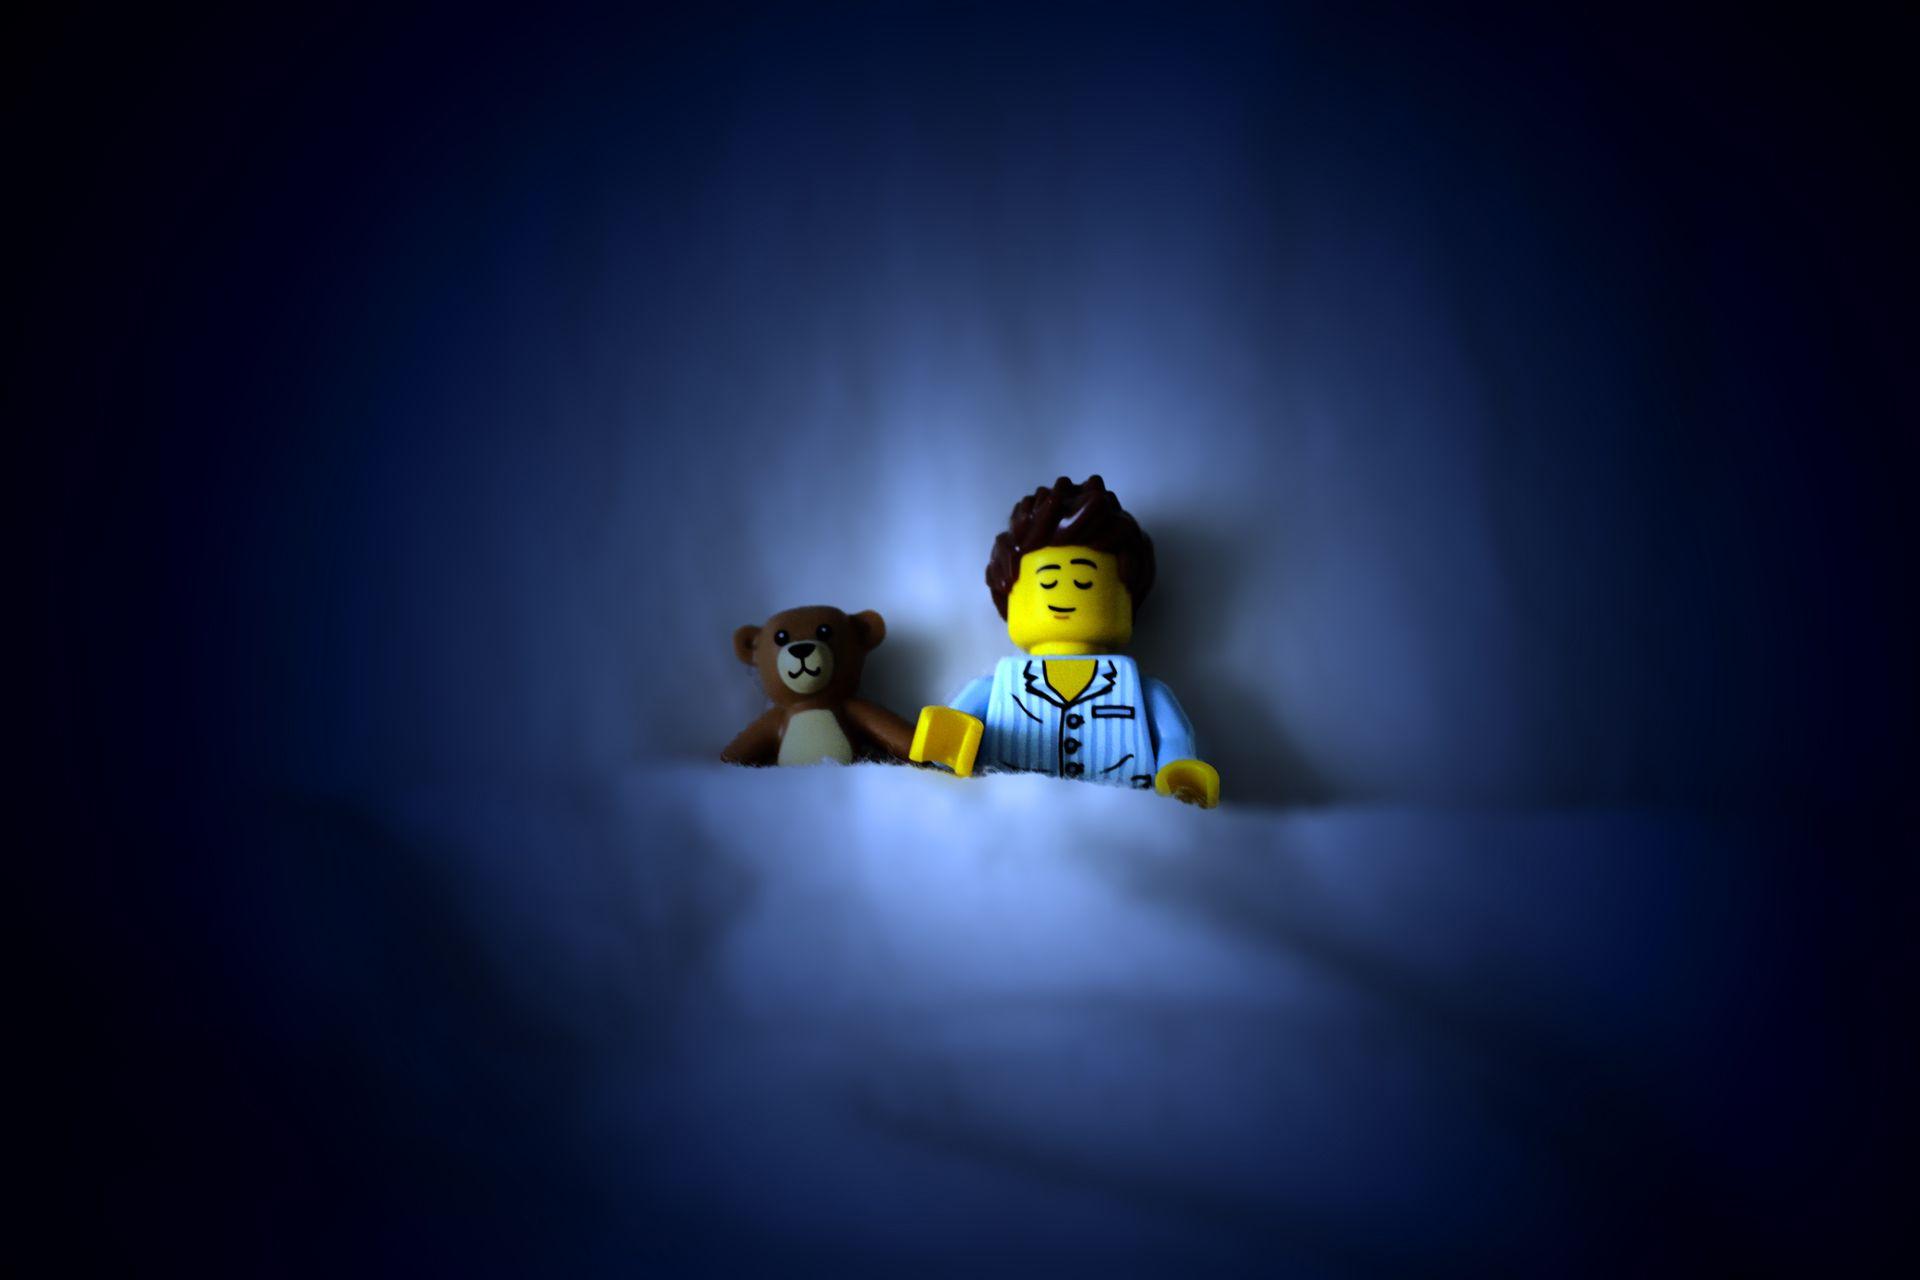 lego sleepyhead picture wallpaper. Lego Minifigures Photo